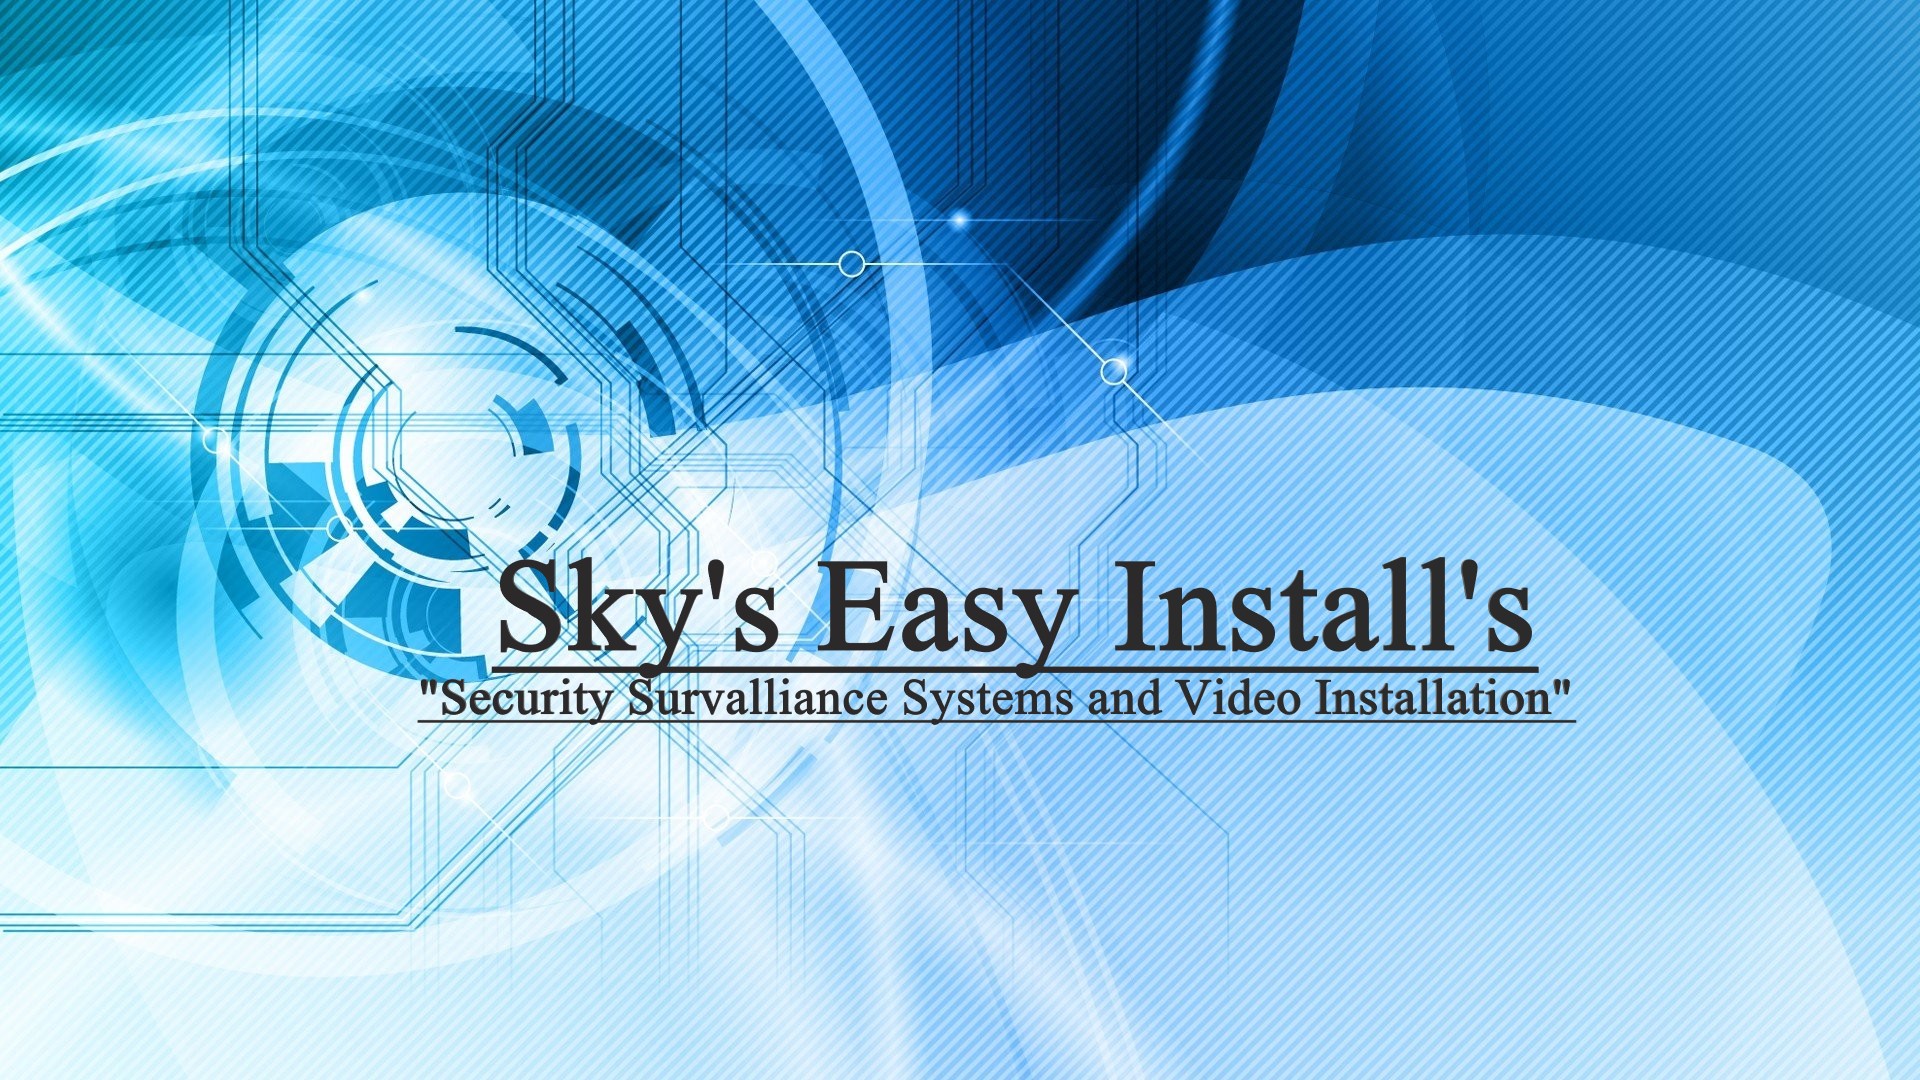 Sky's Easy Sales & Installation 800 2nd Ave NE, Oelwein Iowa 50662